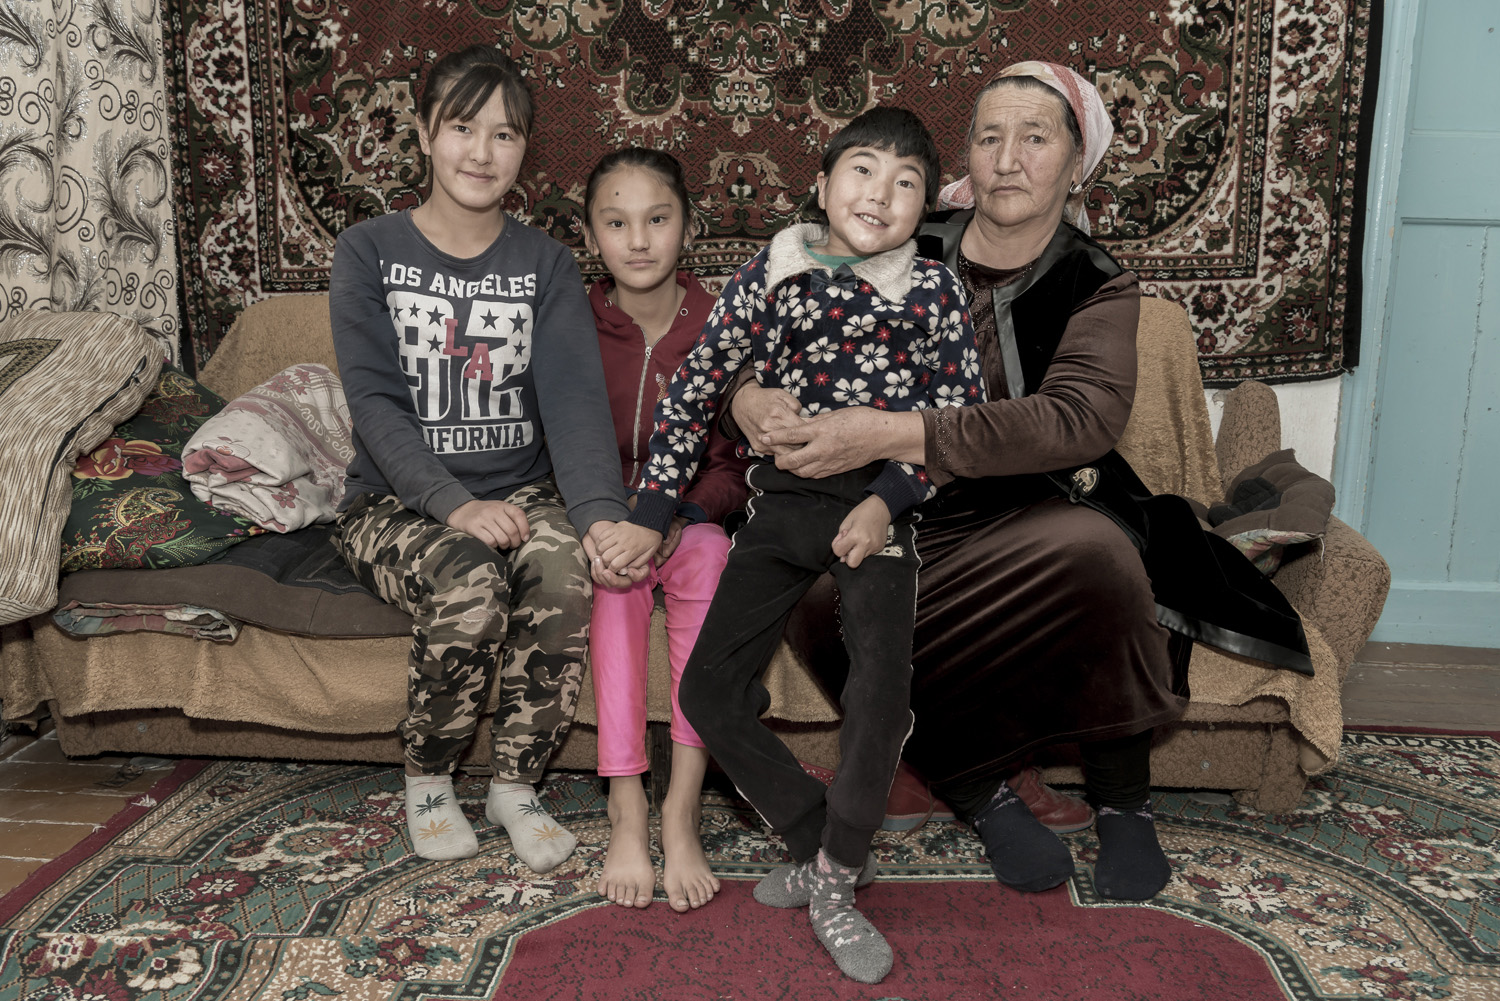 Soviet-Kyrgyzstan-home-elderly-jo-kearney-photography-video-grandparents-caring-soviet-kyrgyzstan-3.jpg